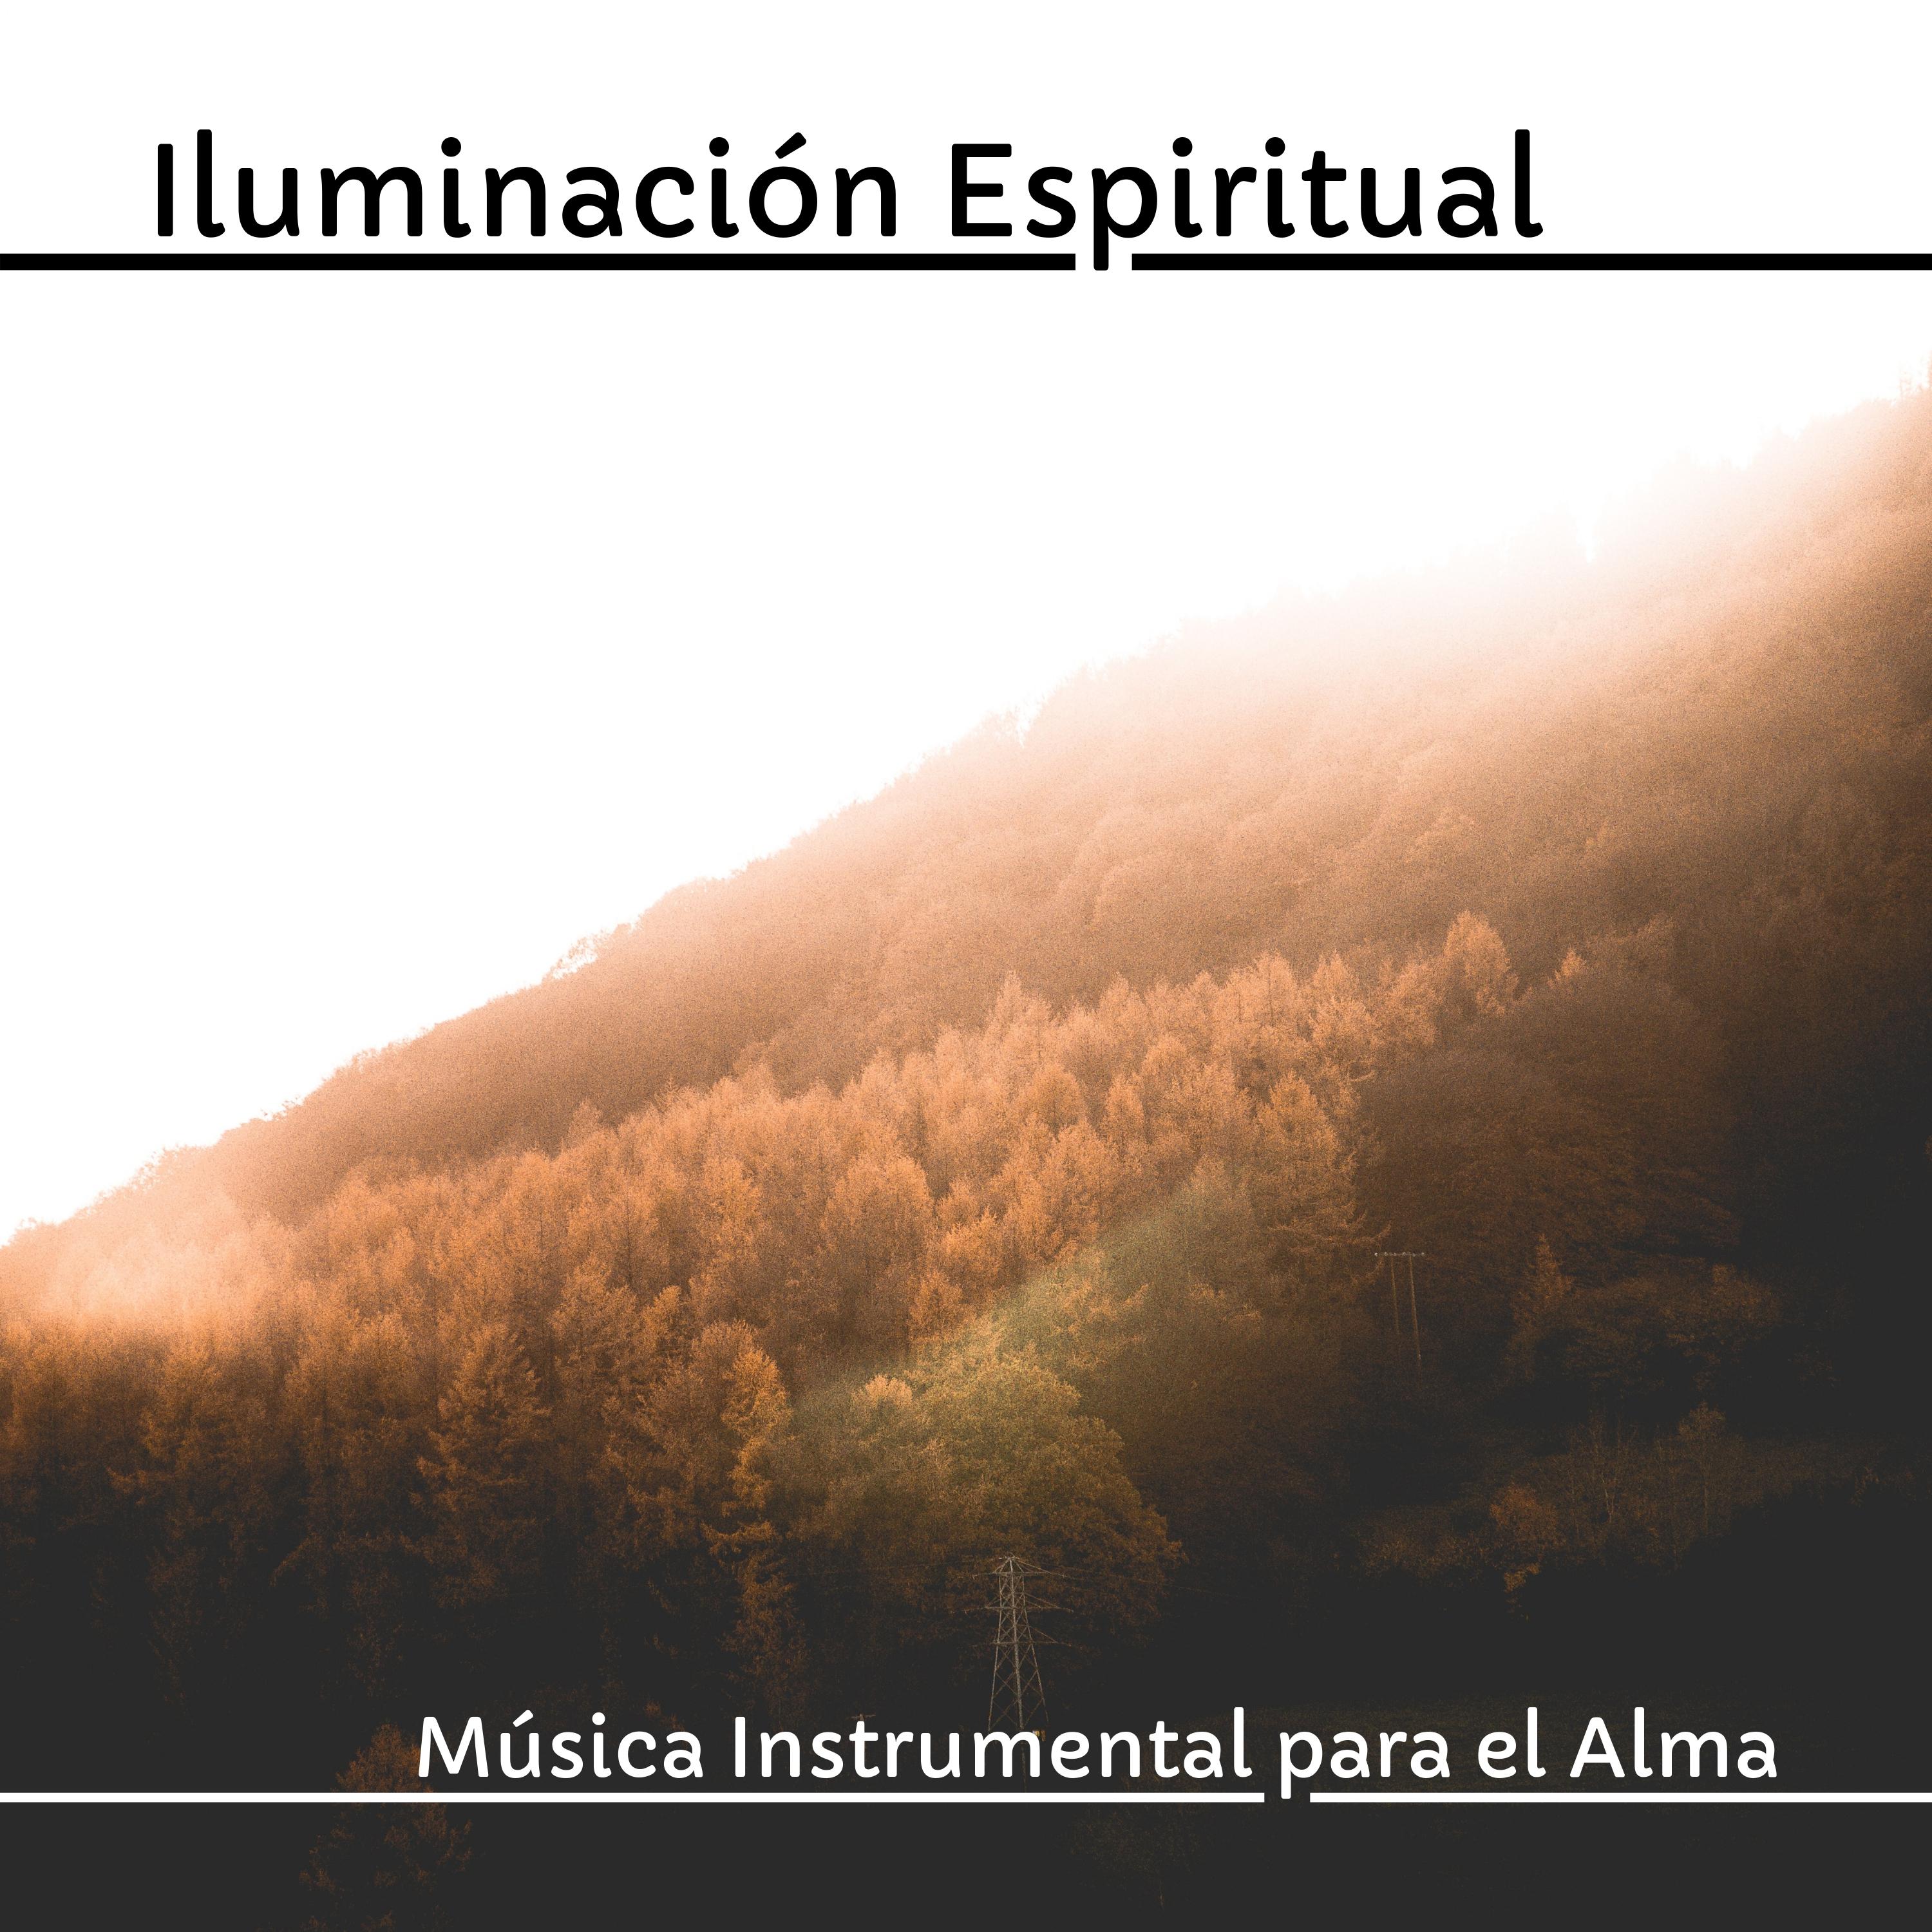 Iluminacio n Espiritual  Mu sica Instrumental para el Alma